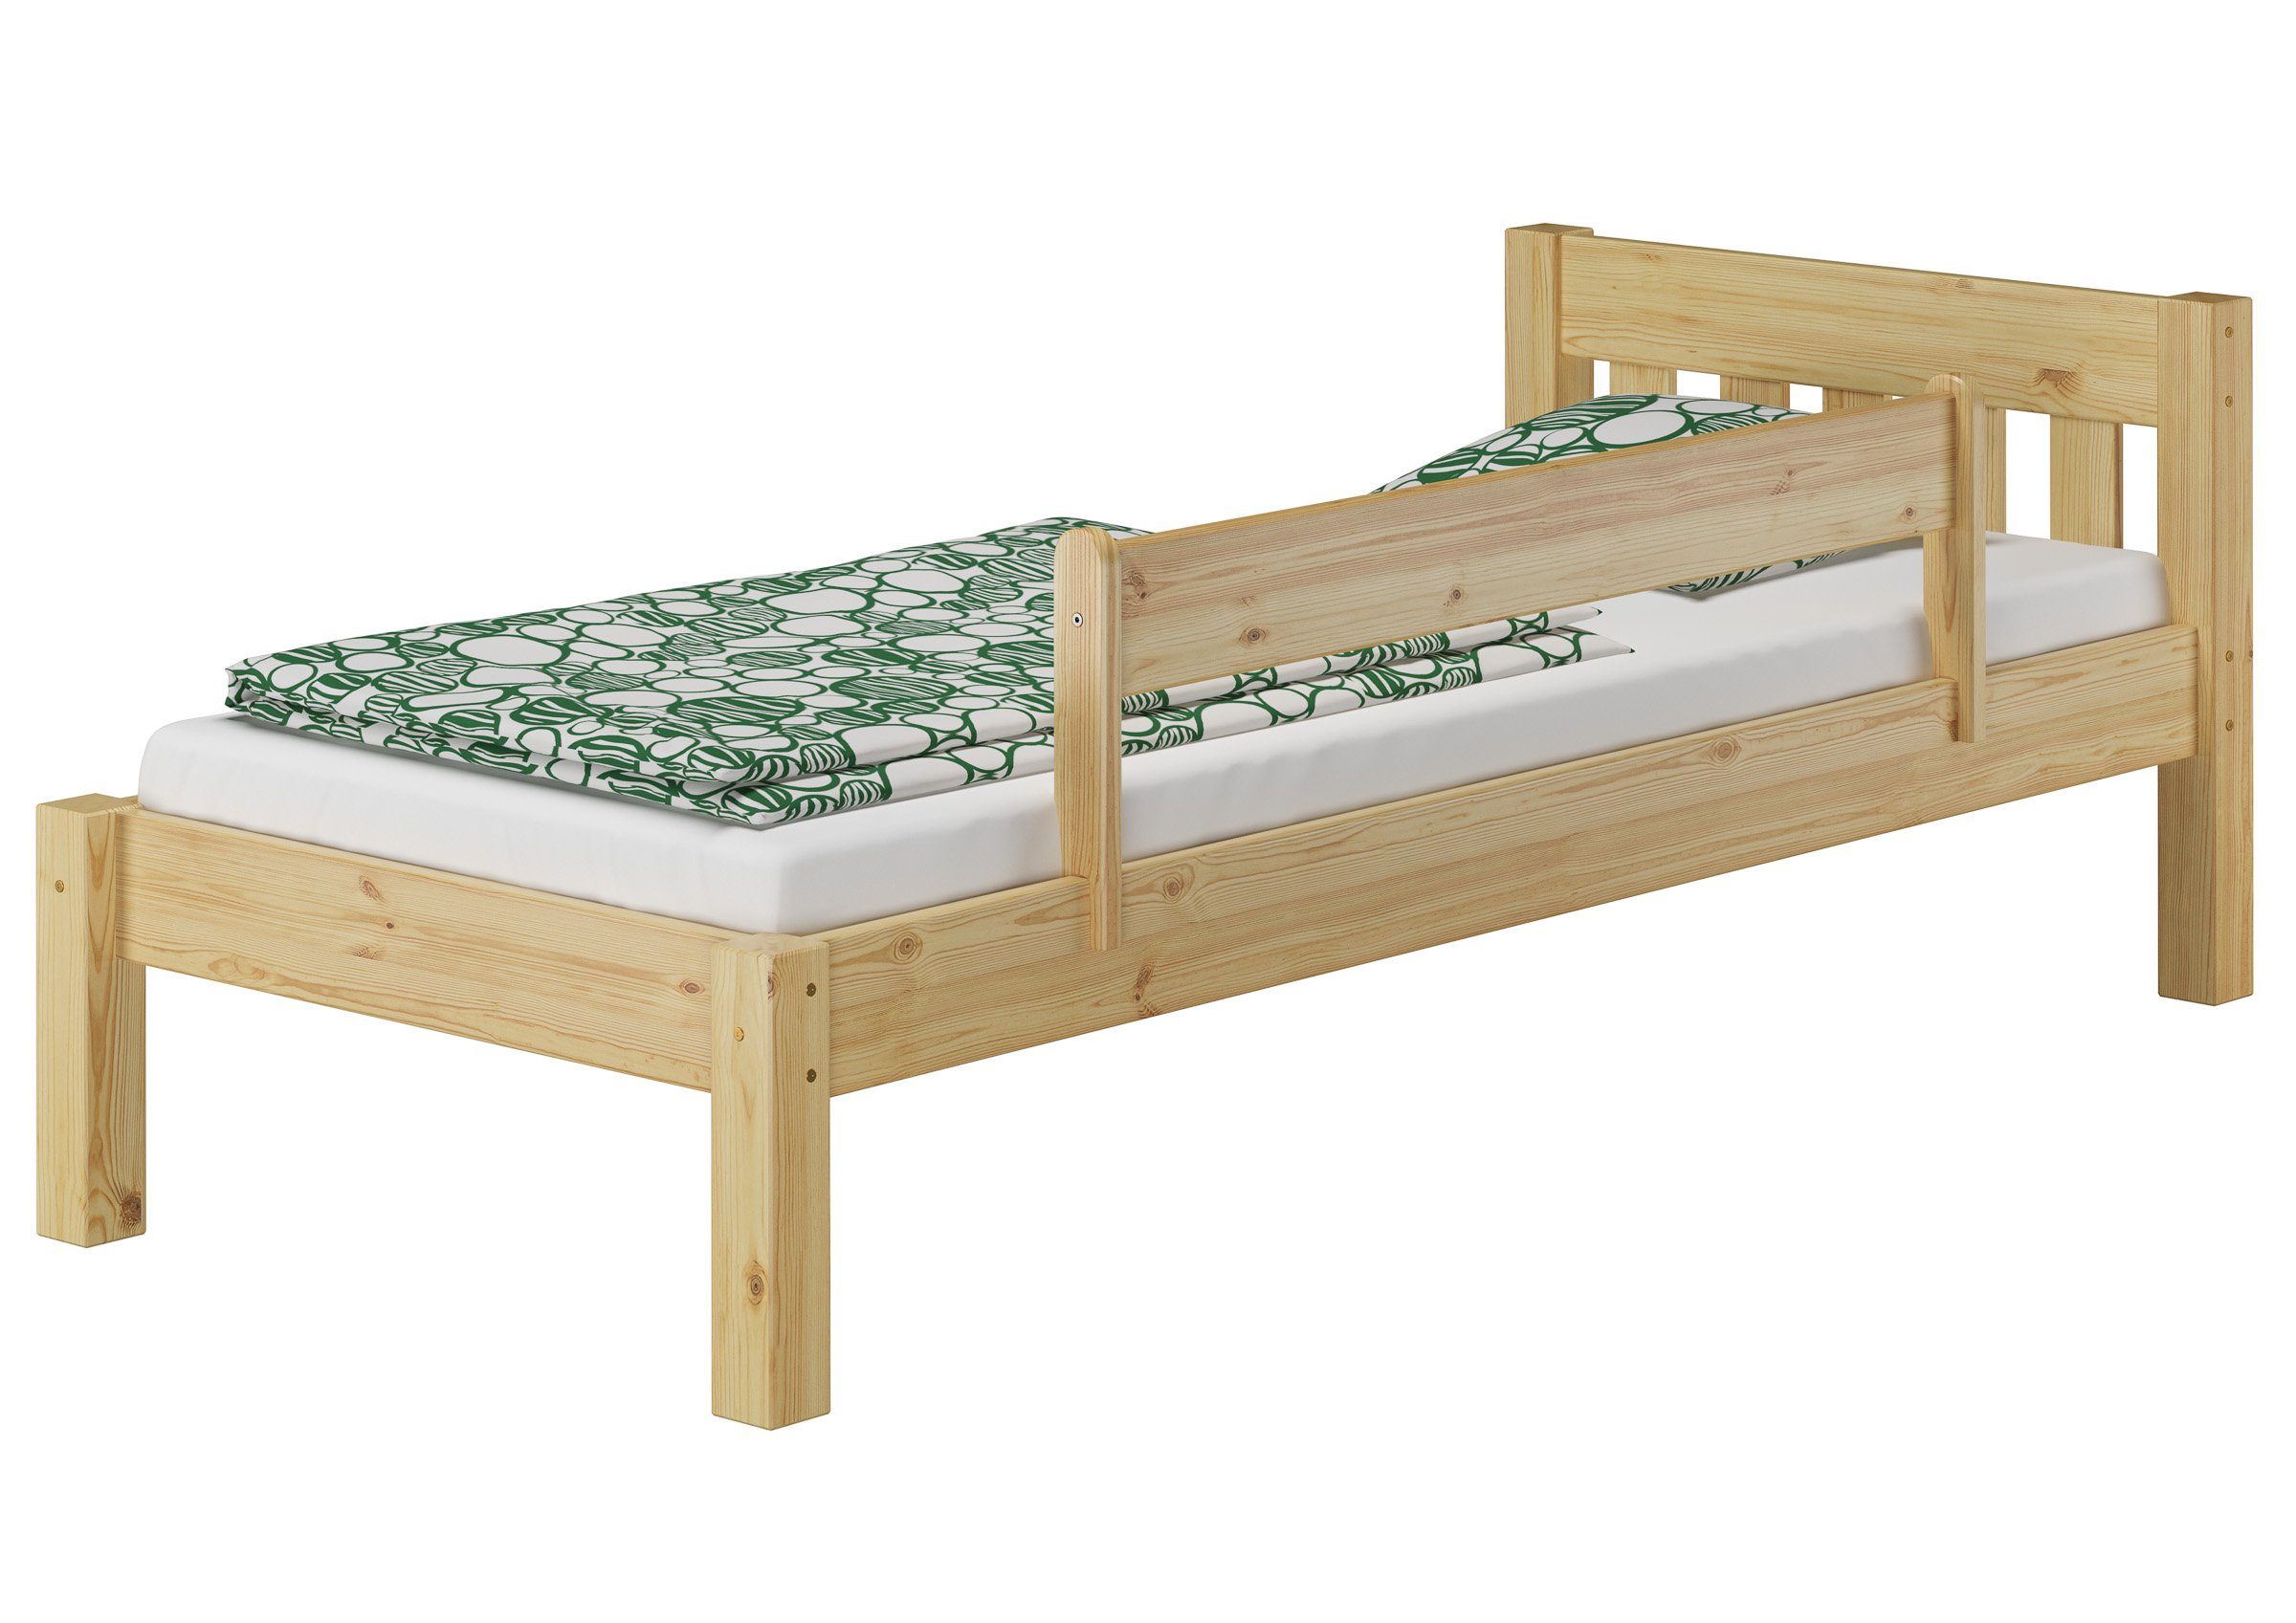 Bett stabil Bettgestell Kieferfarblos massiv, 80x200, lackiert ERST-HOLZ Kiefer und schmal